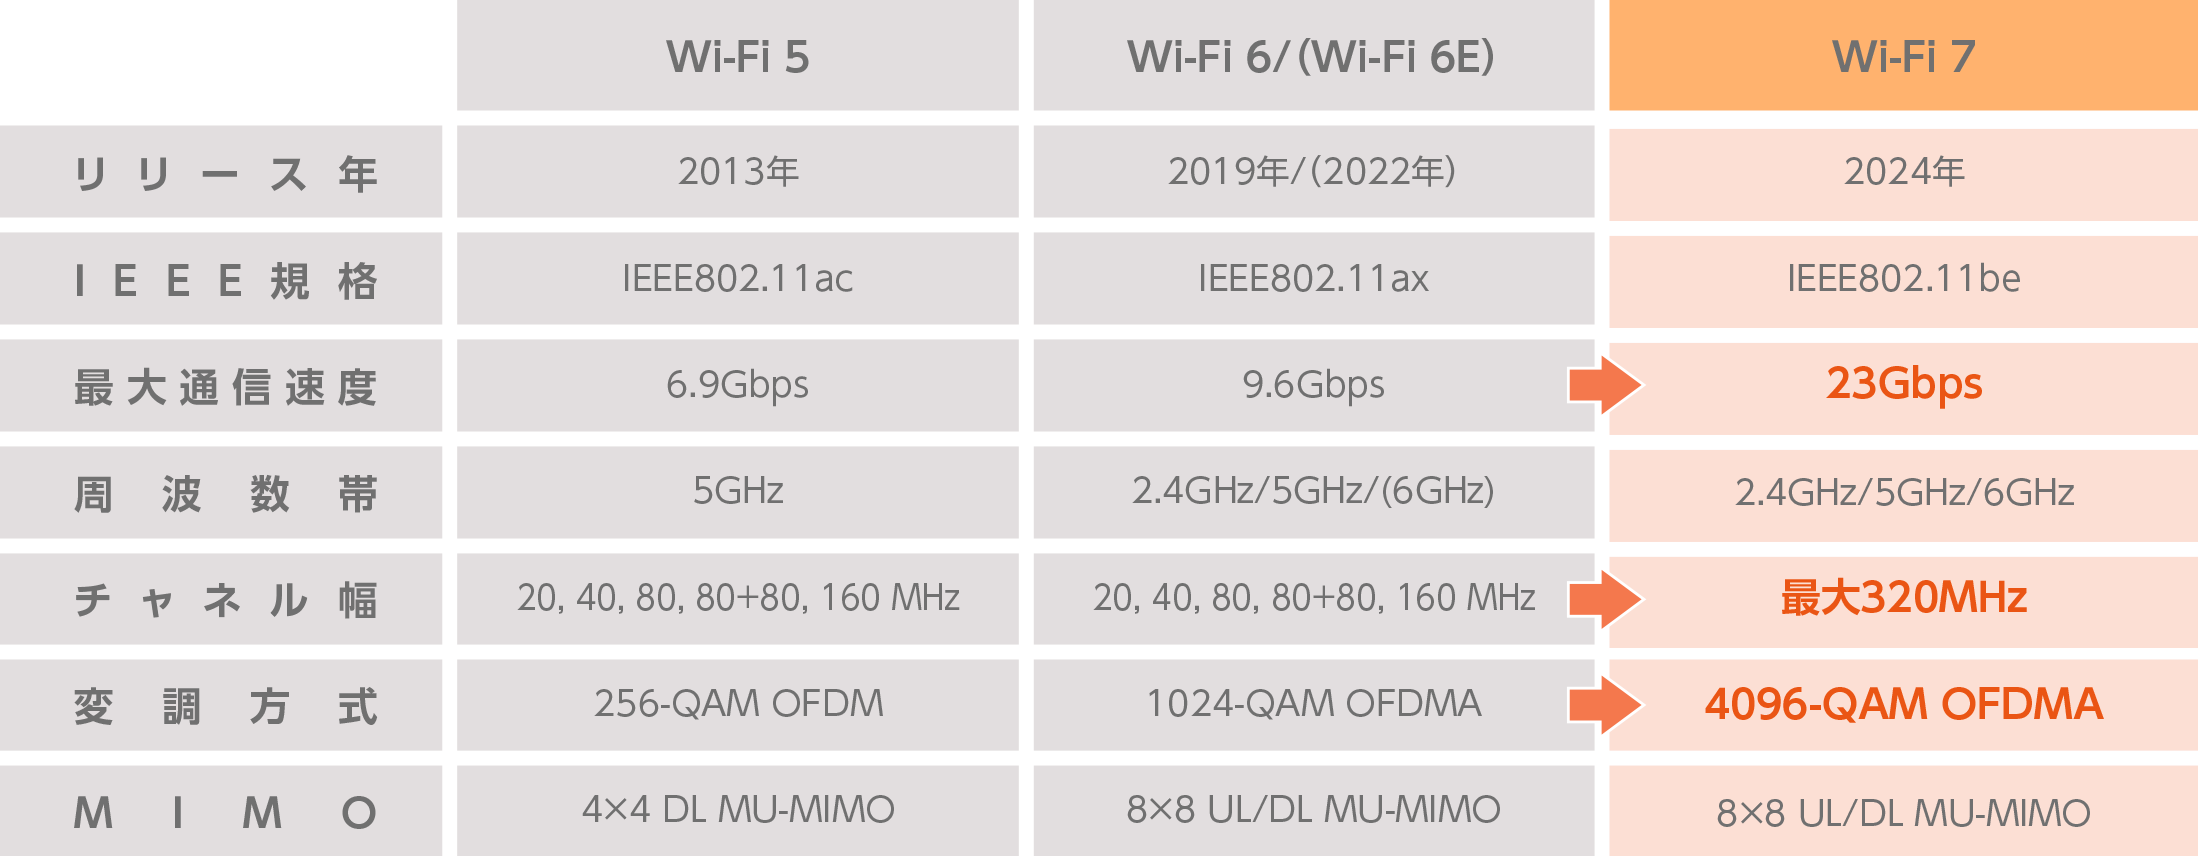 Wi-Fi規格の主な機能比較一覧表